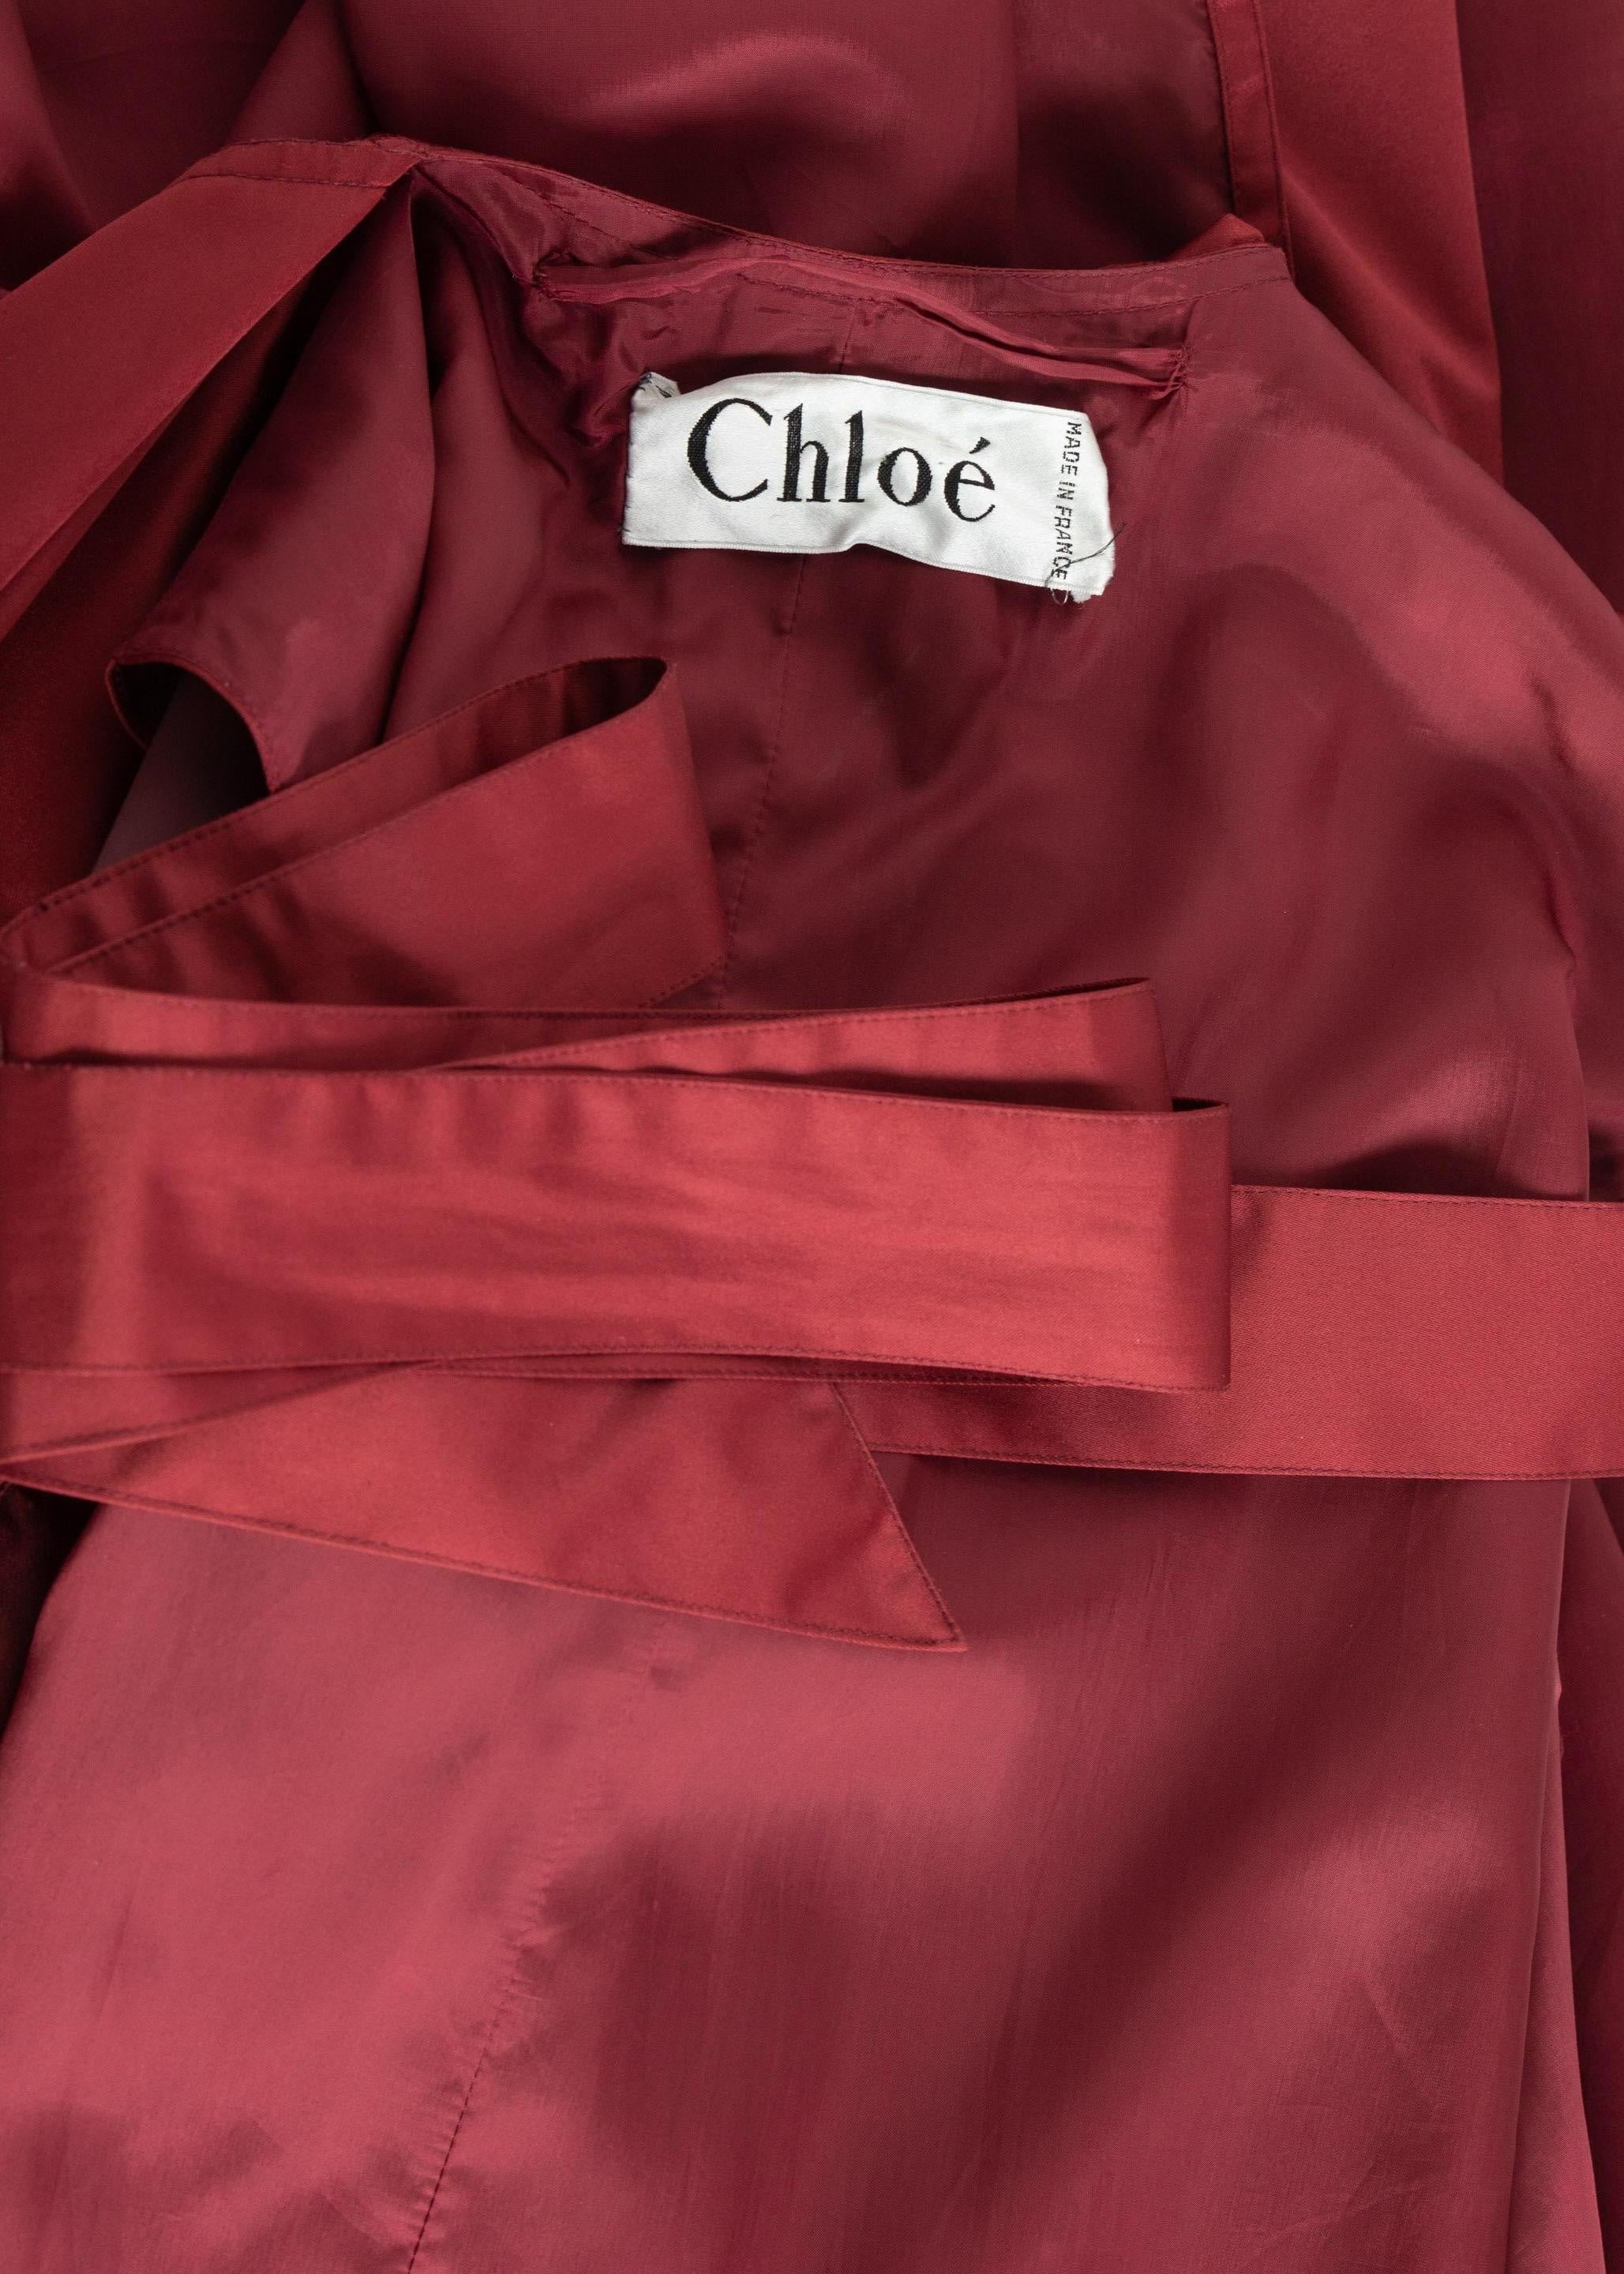 Chloé karl Lagerfeld Bordeaux Gabardine Belted Cape Trench Coat, 1980s In Good Condition In Boca Raton, FL